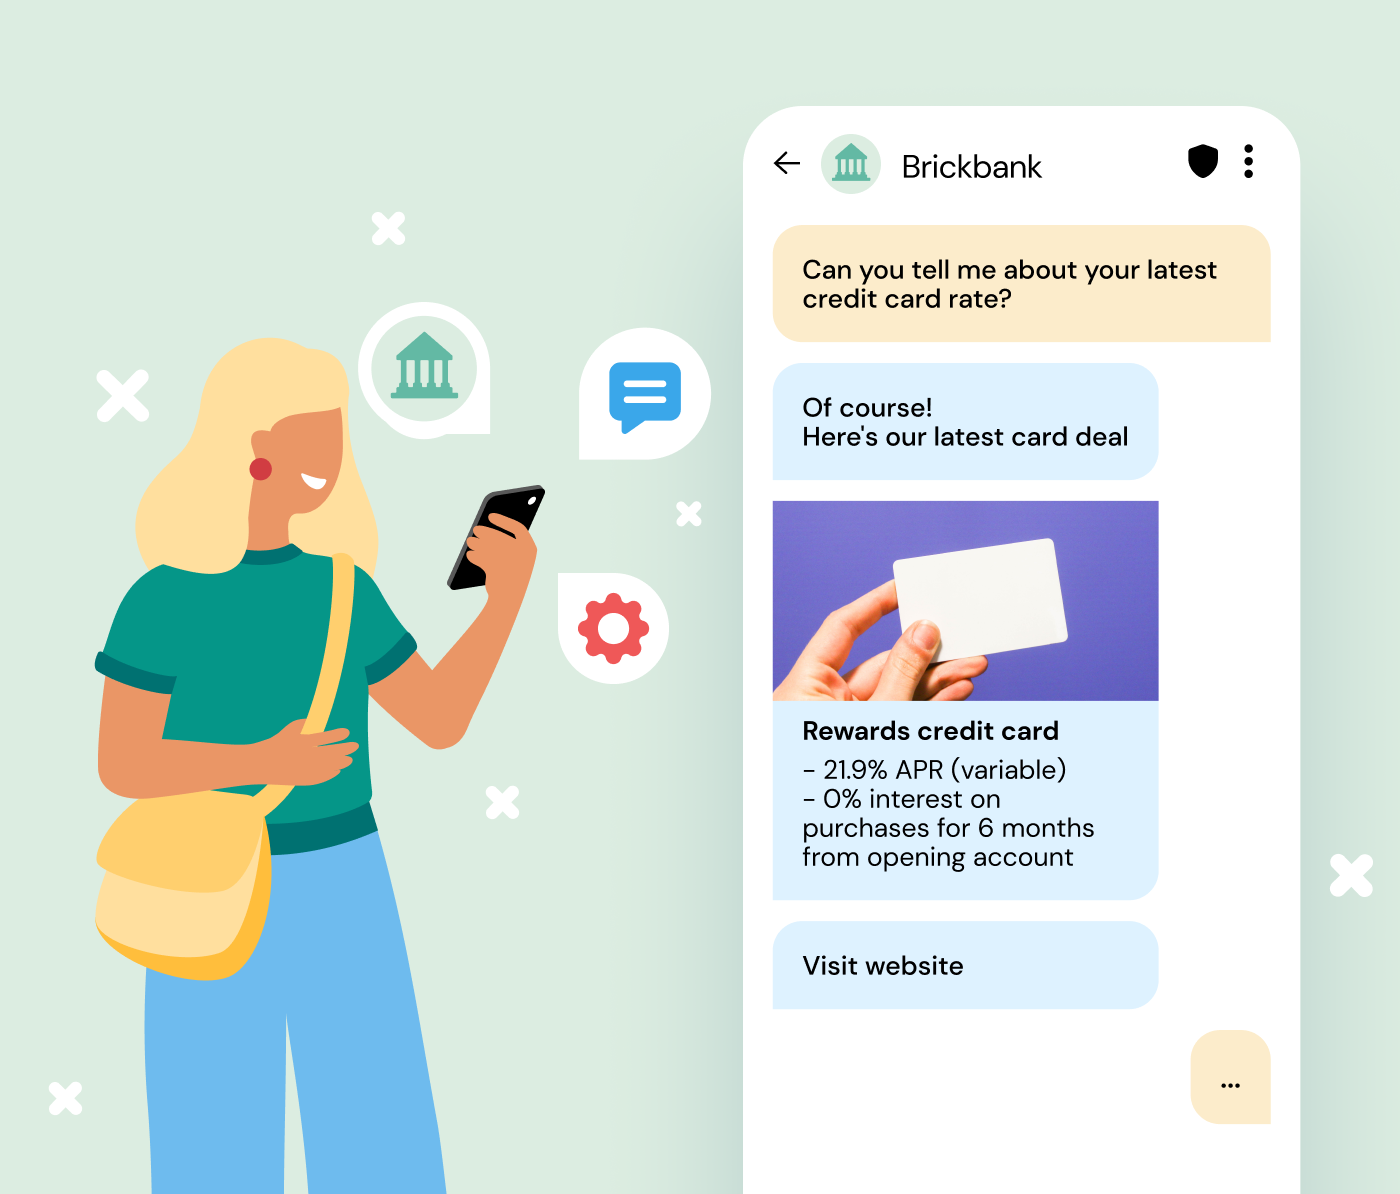 WhatsApp can help power conversational banking experiences